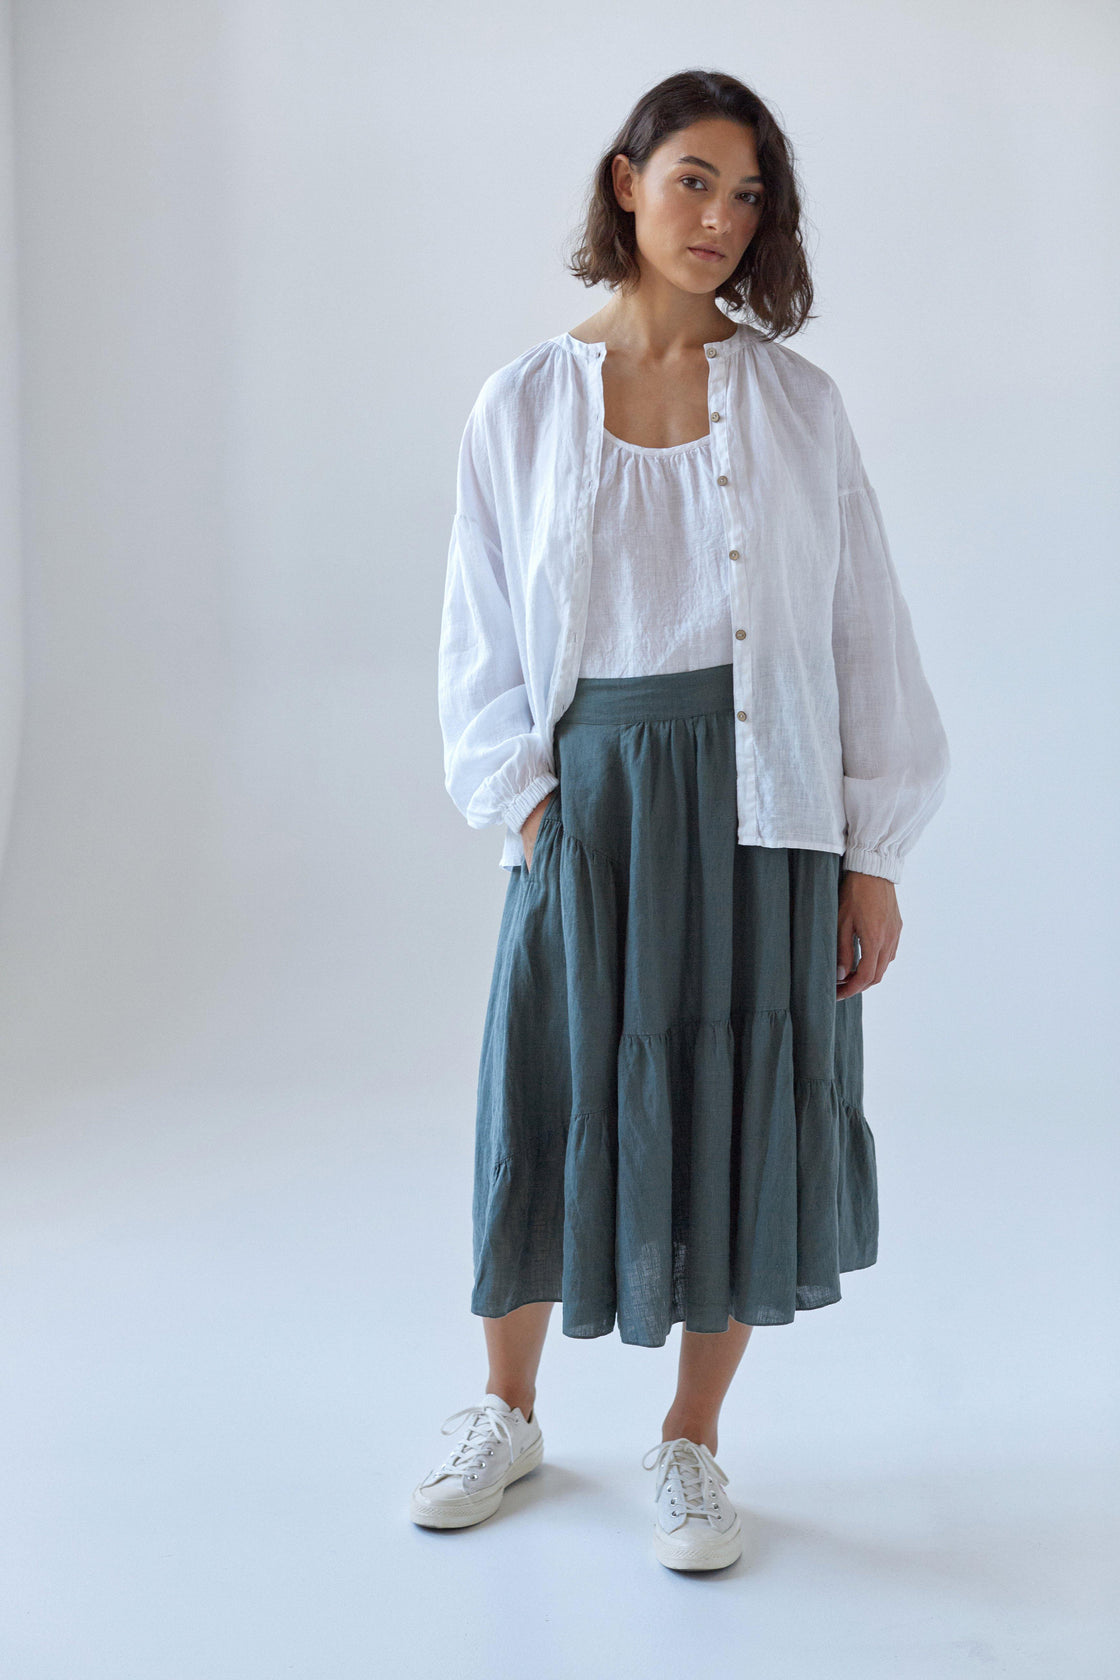 White Long Sleeve Linen Blouse with Green Skirt - Manufacture de Lin